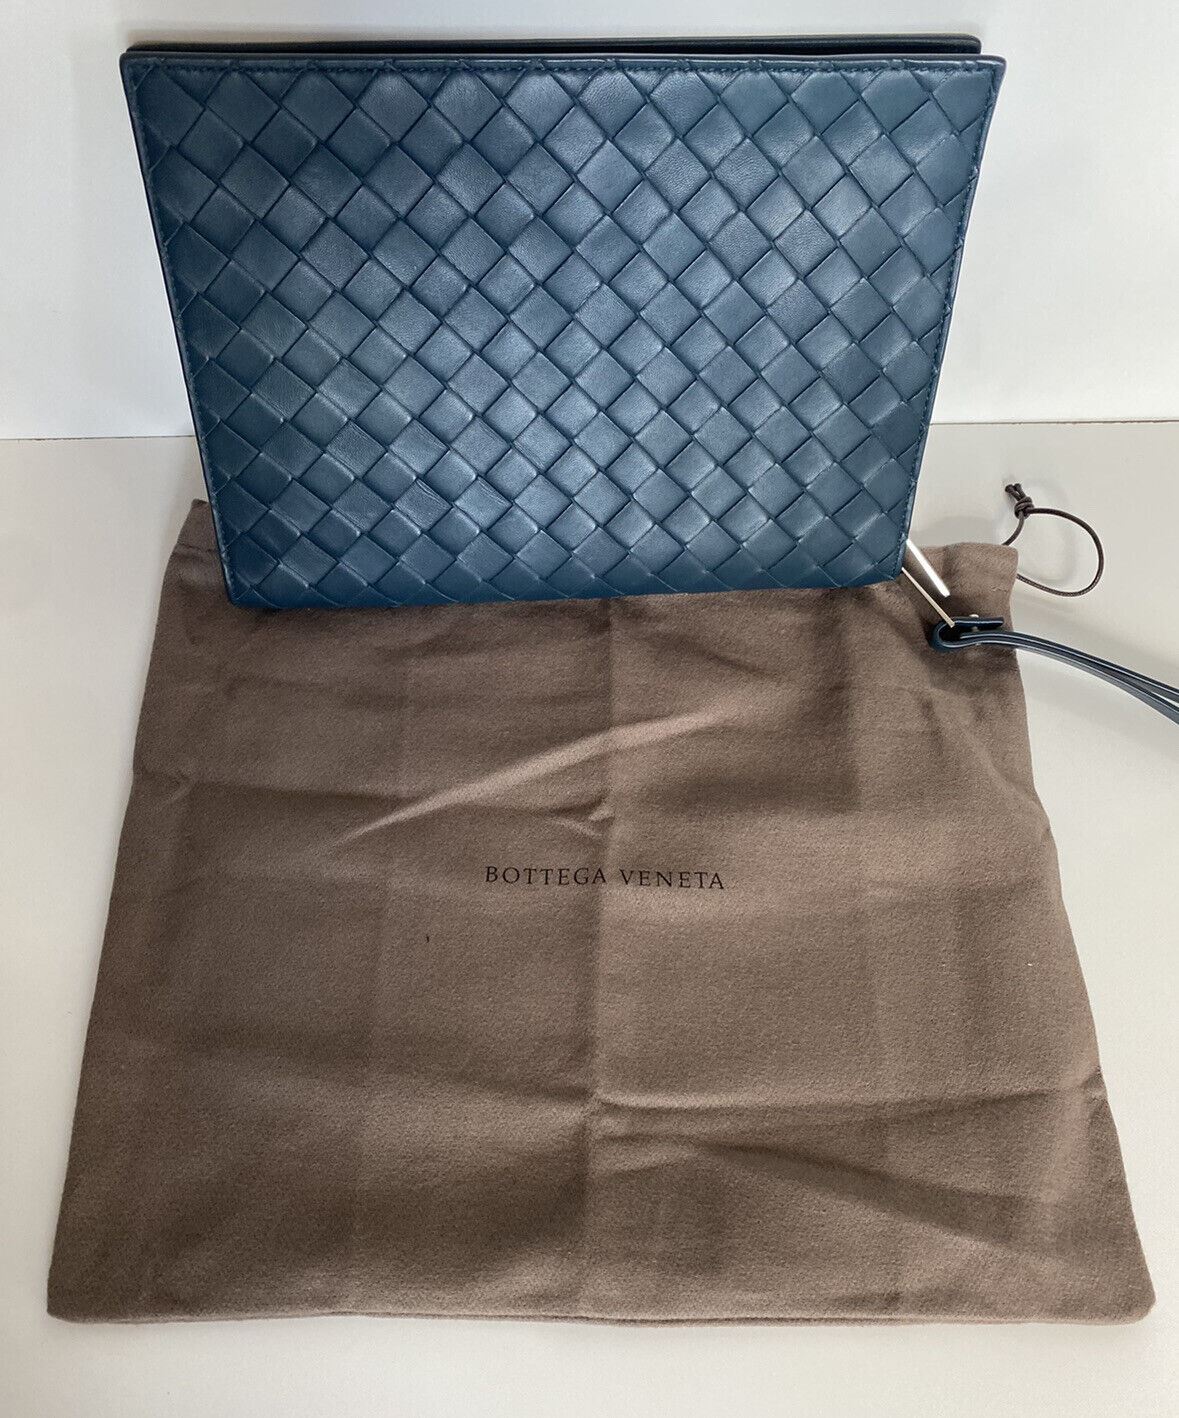 NWT $1600 Bottega Veneta Intrecciato Leather Deep Blue Document Case 592855 IT